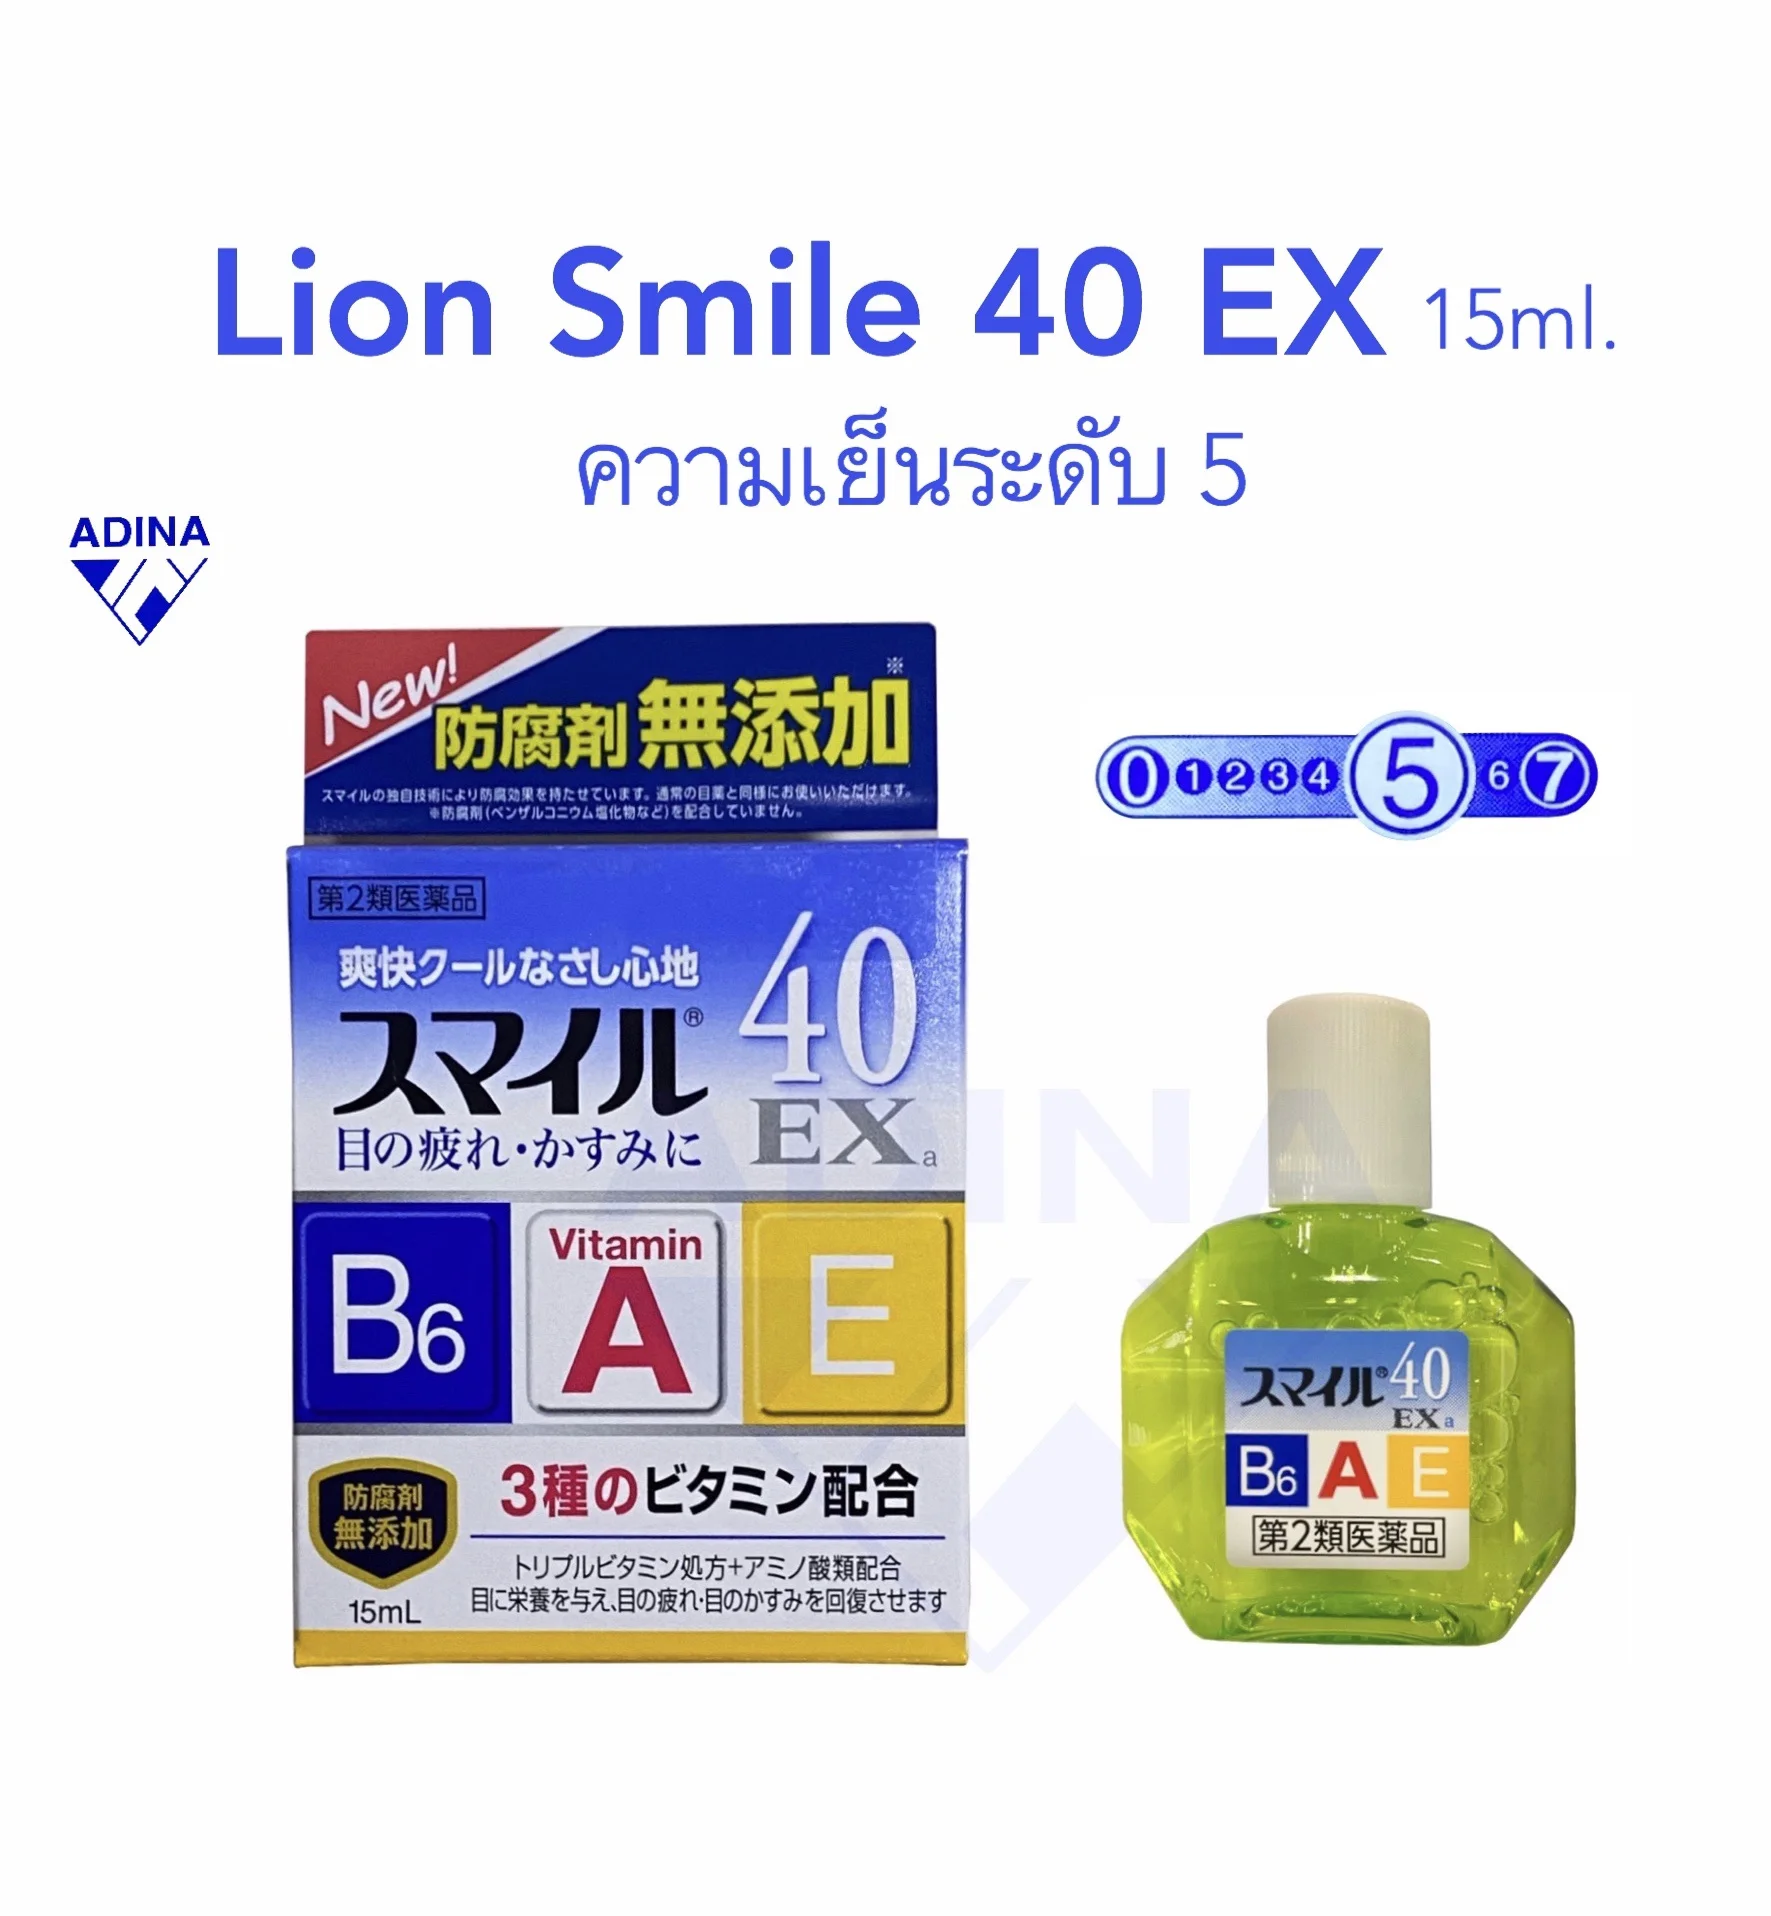 Lion Smile 40 EX 15ml. ความเย็นระดับ 5